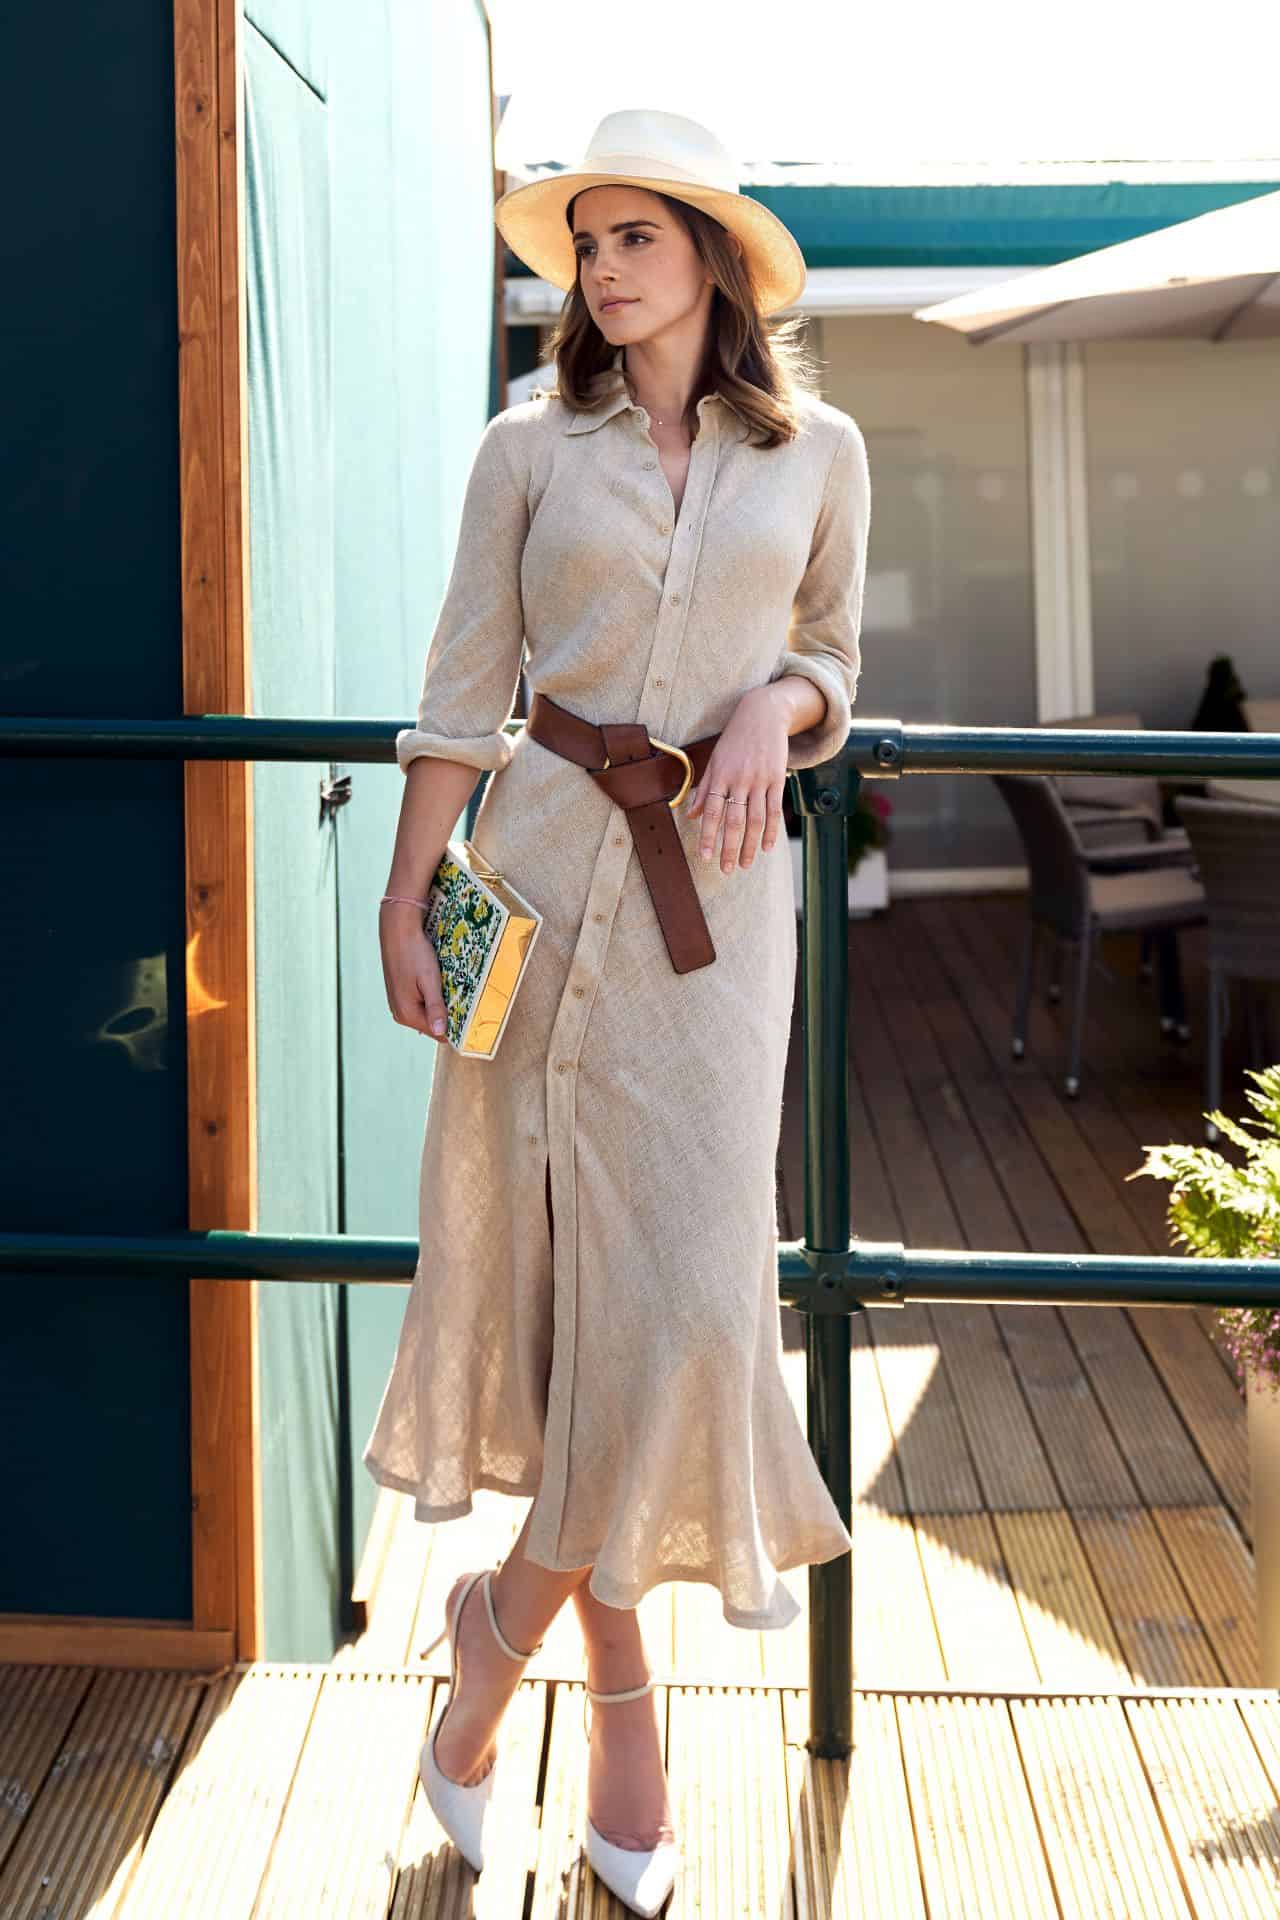 Emma Watson Looked Fantastic in a Beige Knitted Linen Dress at Wimbledon